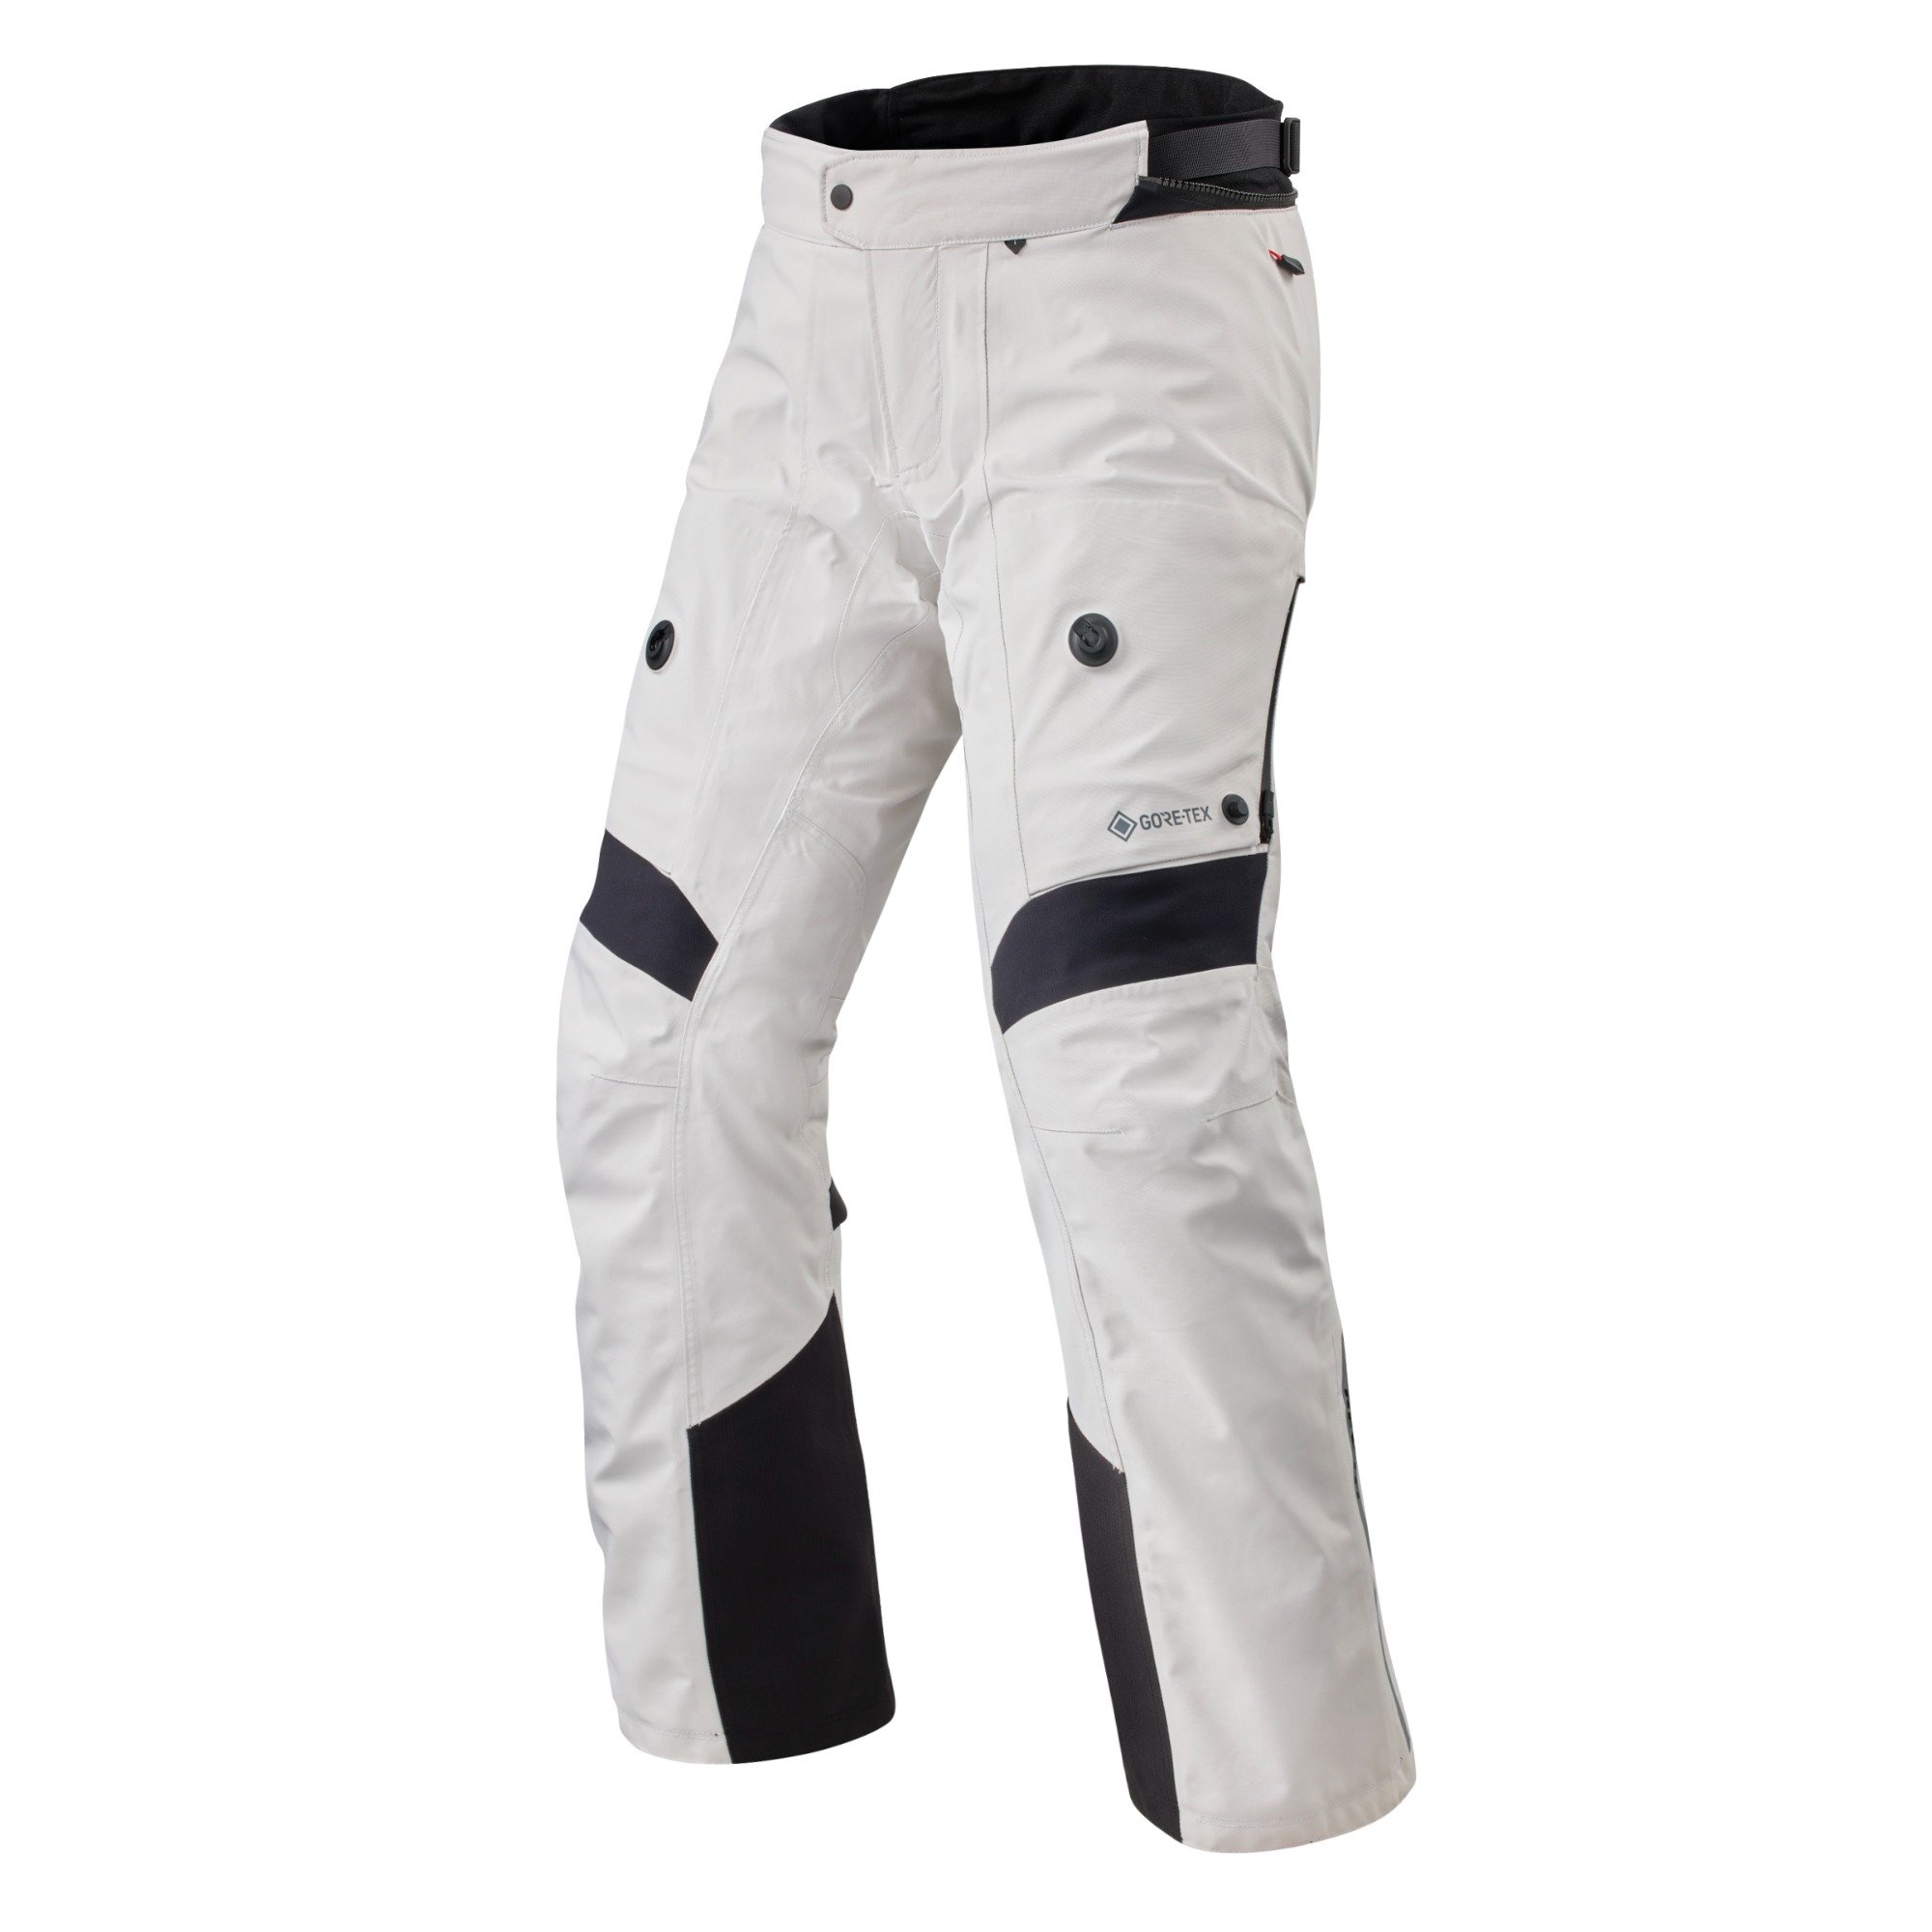 Image of REV'IT! Pants Poseidon 3 GTX Silver Black Standard Motorcycle Pants Talla 2XL